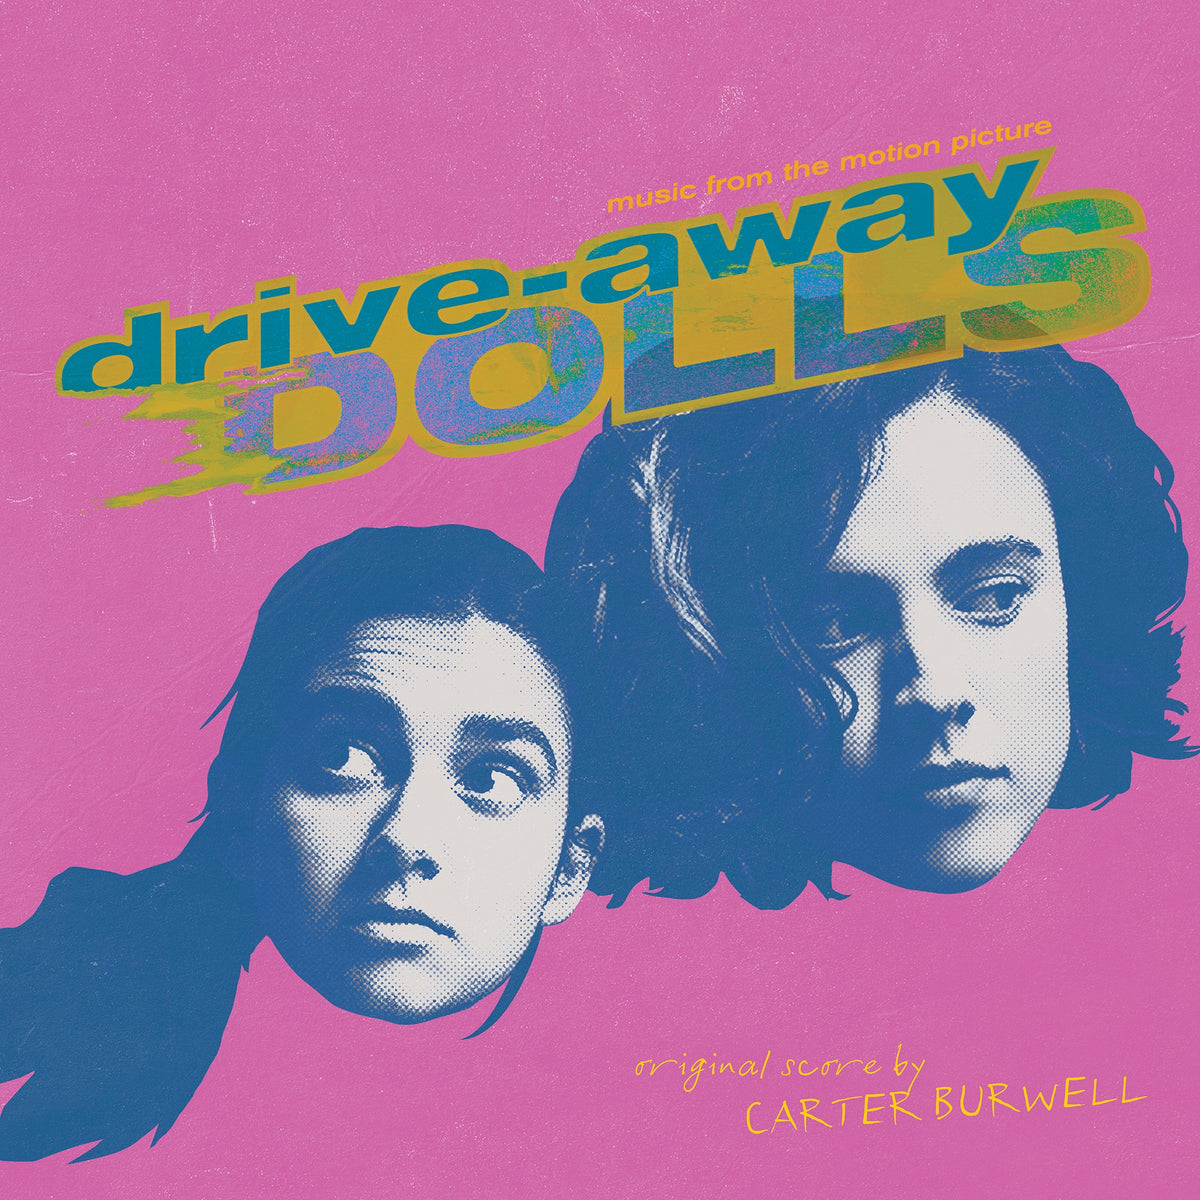 Drive Away Dolls (Original Motion Picture Soundtrack)